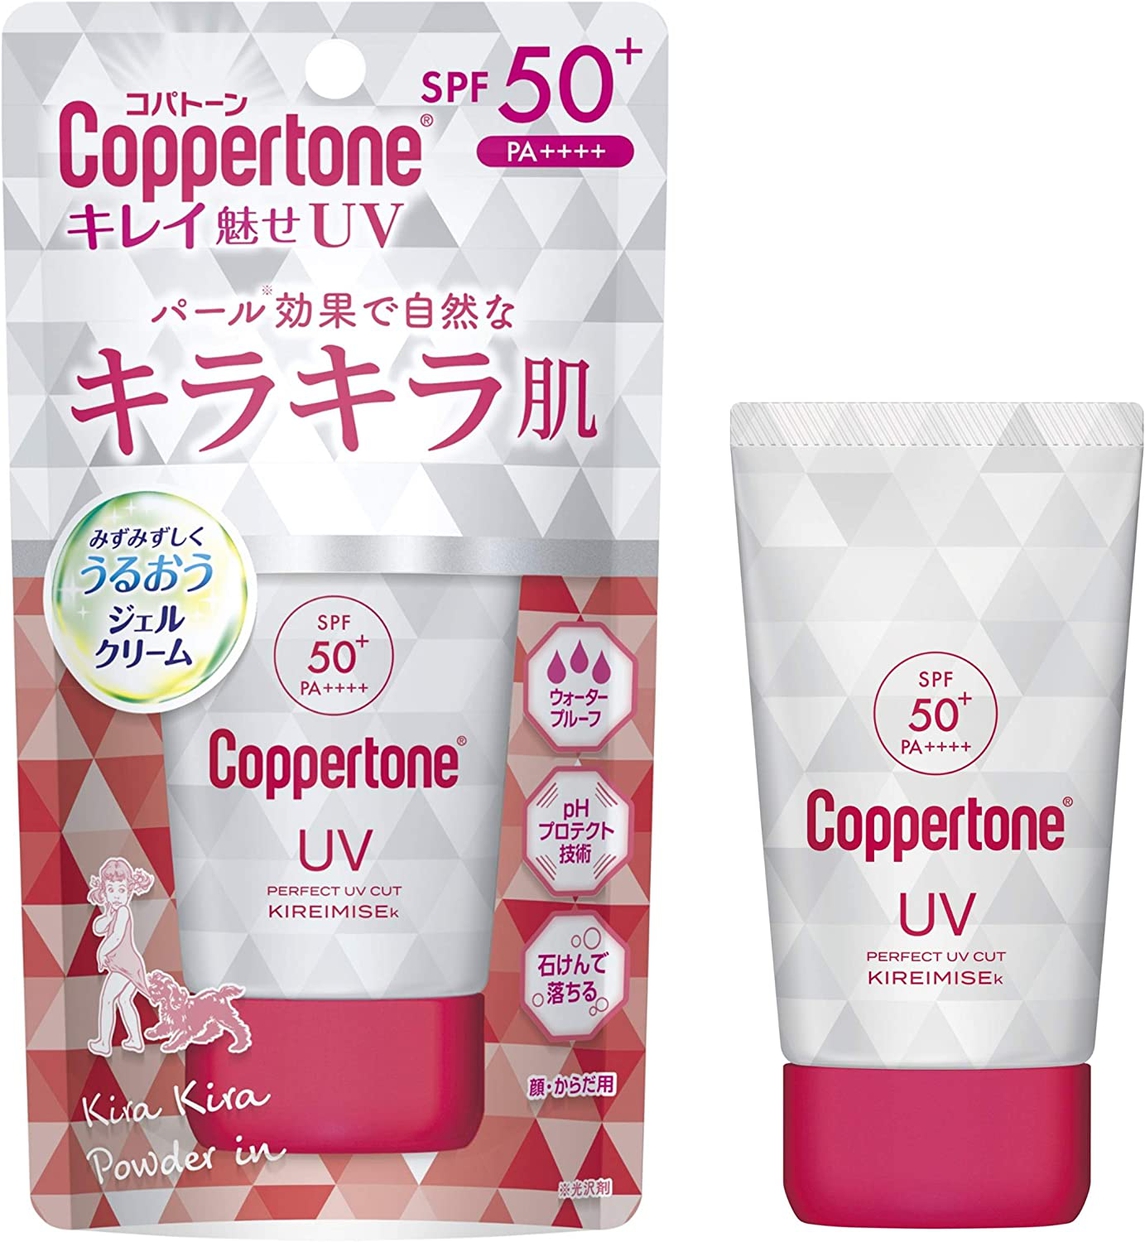 Coppertone(コパトーン) パーフェクトUVカット キレイ魅せUV キラキラ肌の商品画像サムネ1 